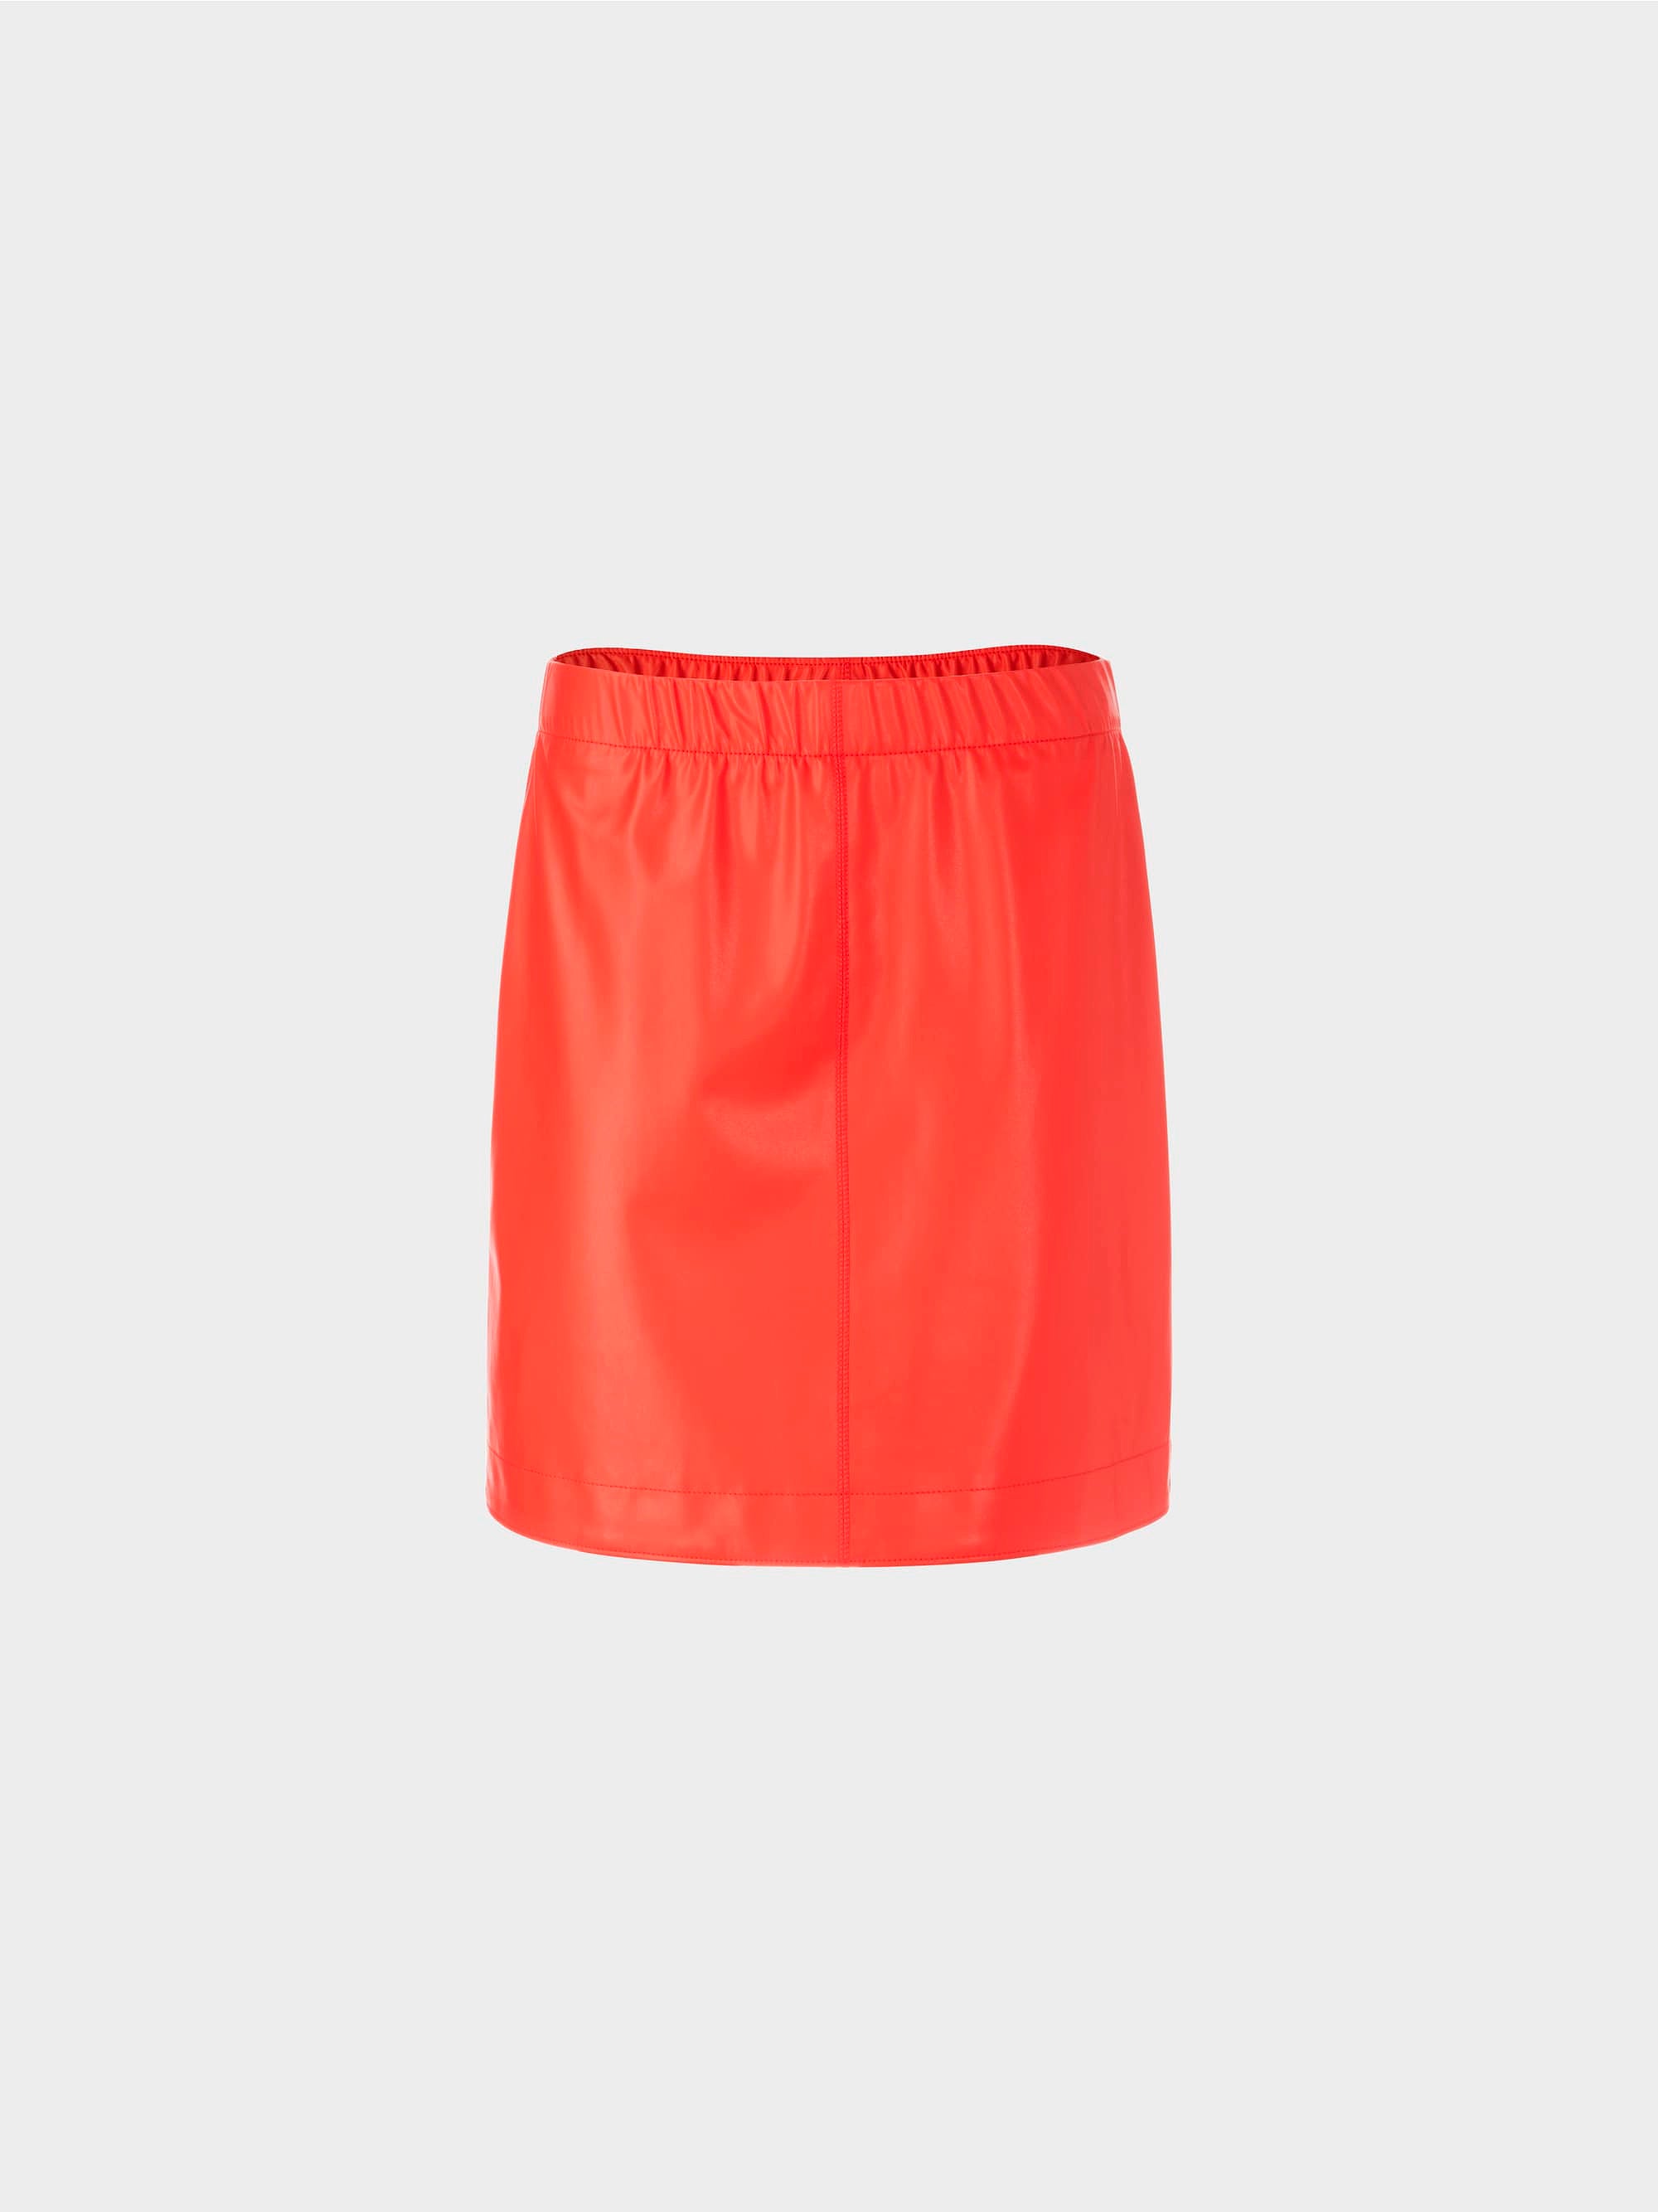 Short Skirt In Fun Leather_VS 31.06 J06_278_06